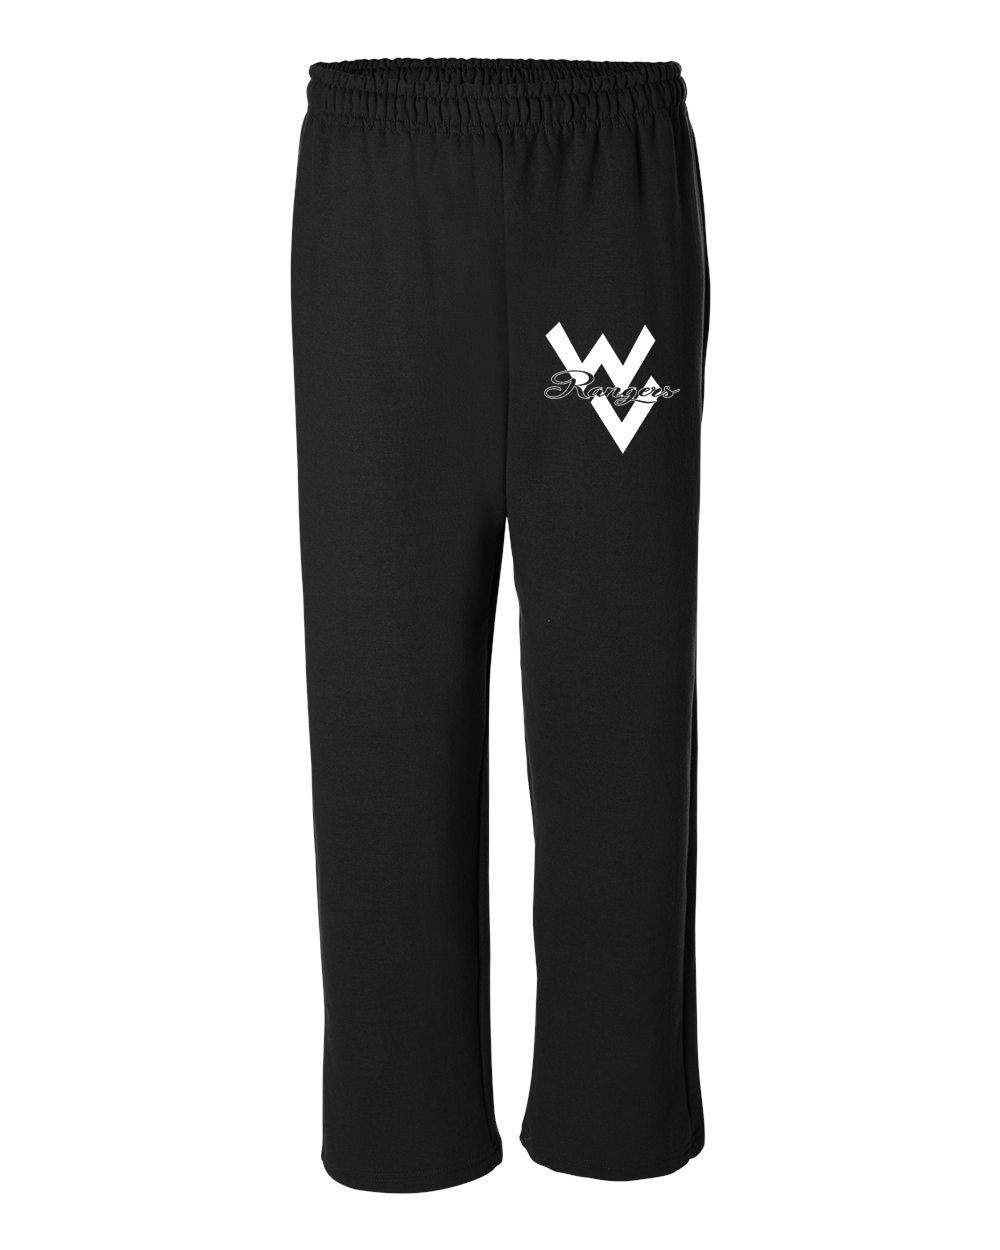 Wallkill Cheer Design 1 Open Bottom Sweatpants